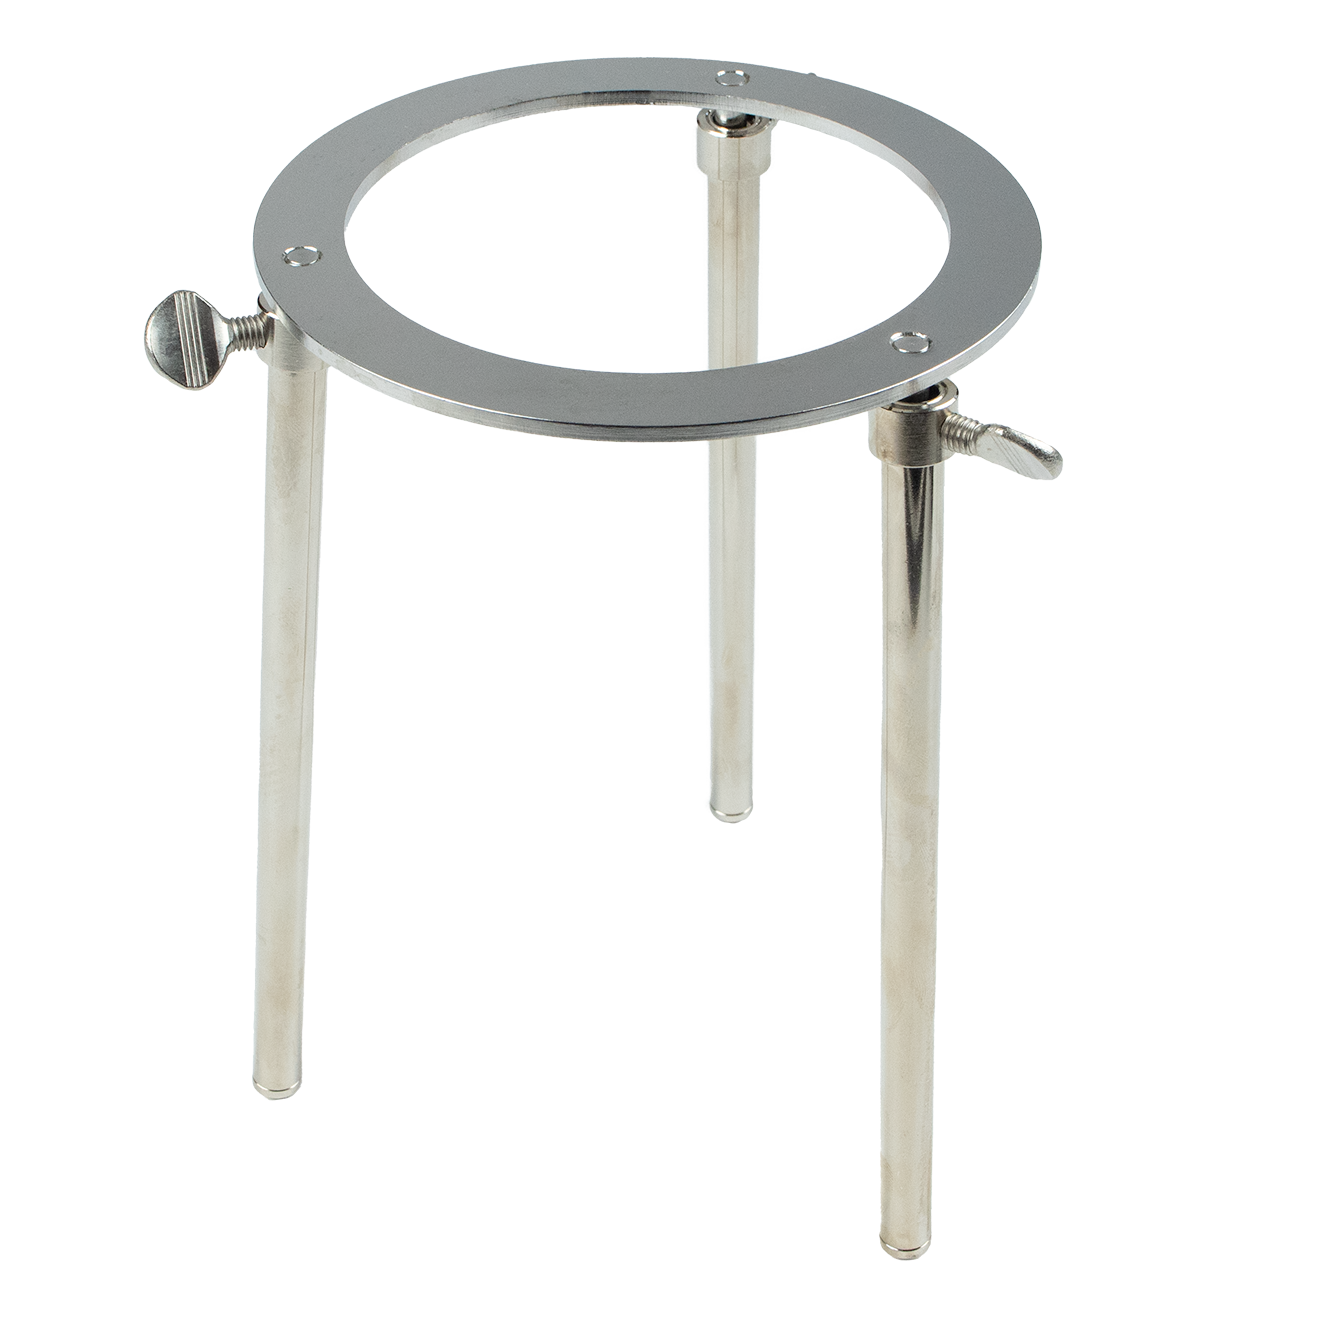 Tripod Height Adjustable - inner diameter 120 mm - stainless steel